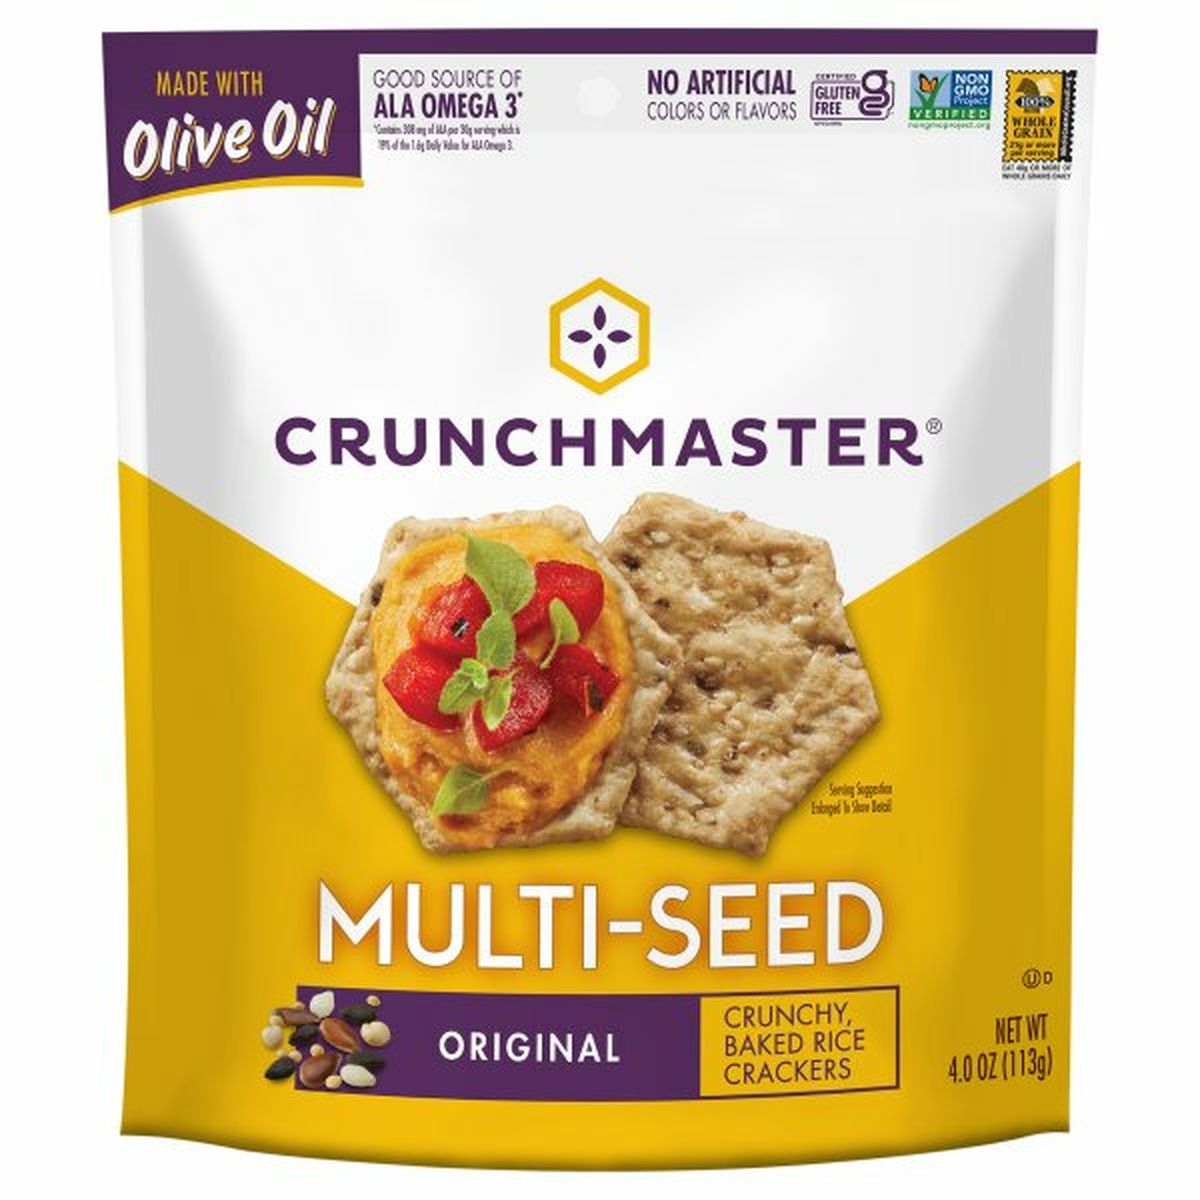 Calories in Crunchmaster Crackers, Multi-Seed, Original